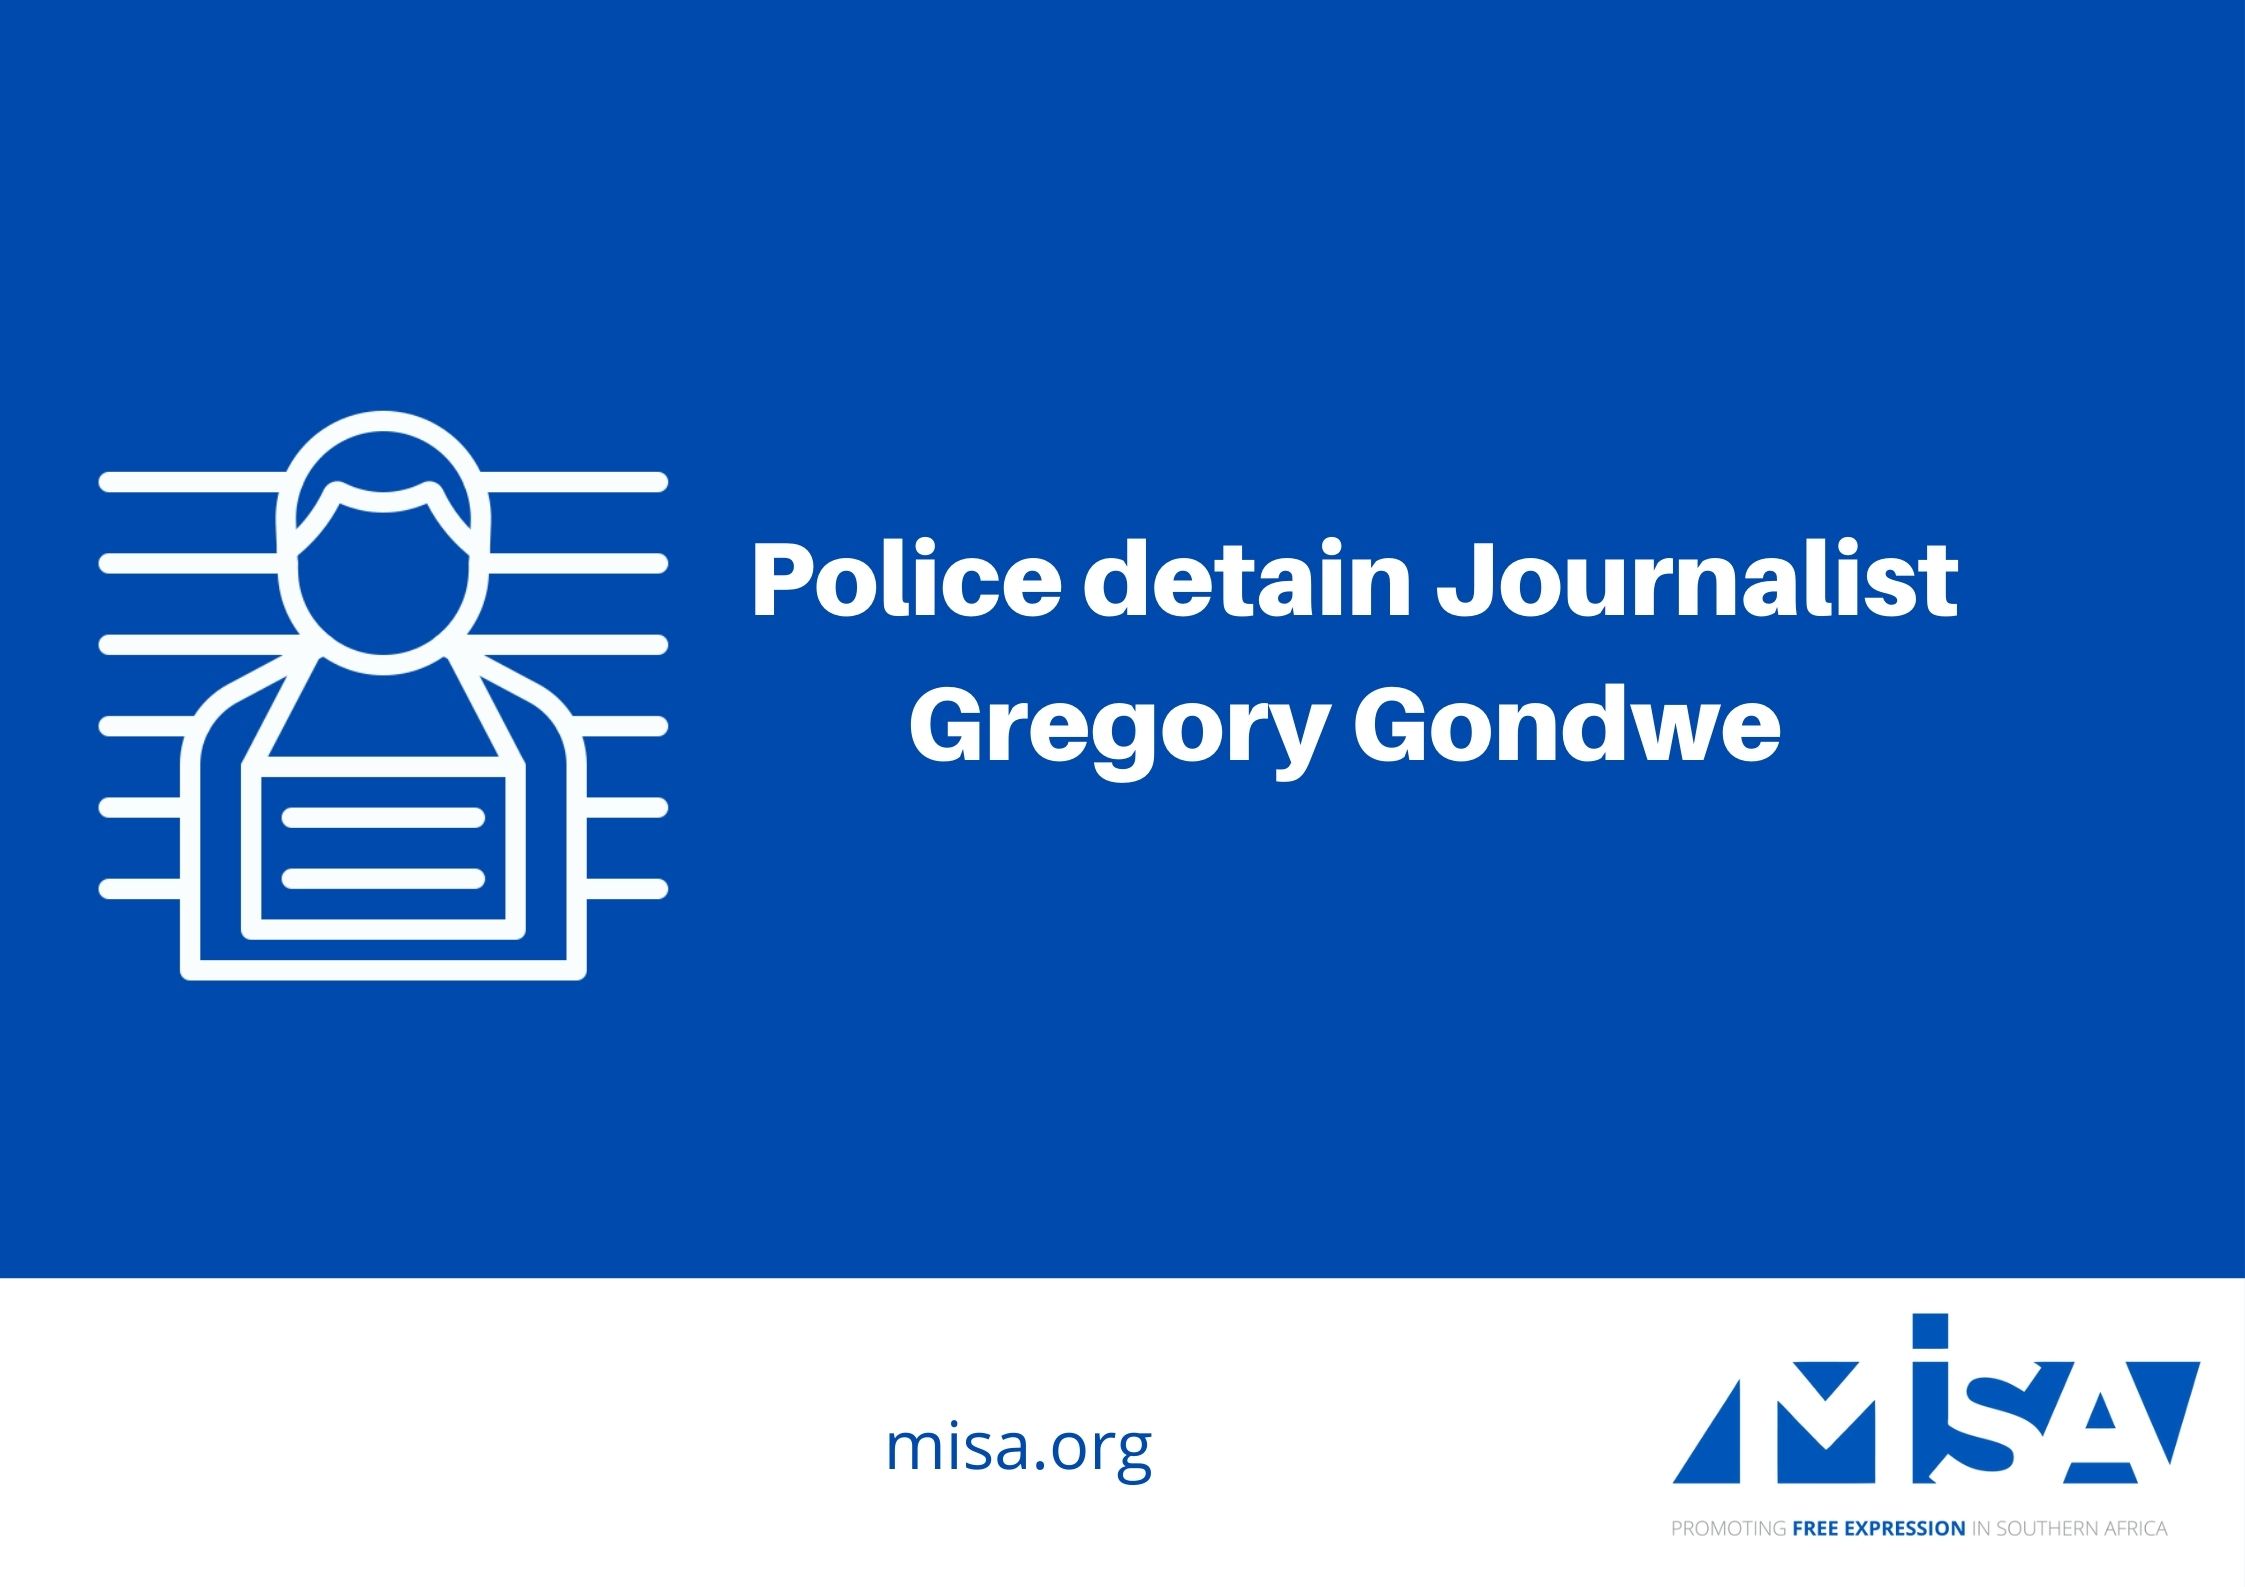 Police detain Journalist Gregory Gondwe